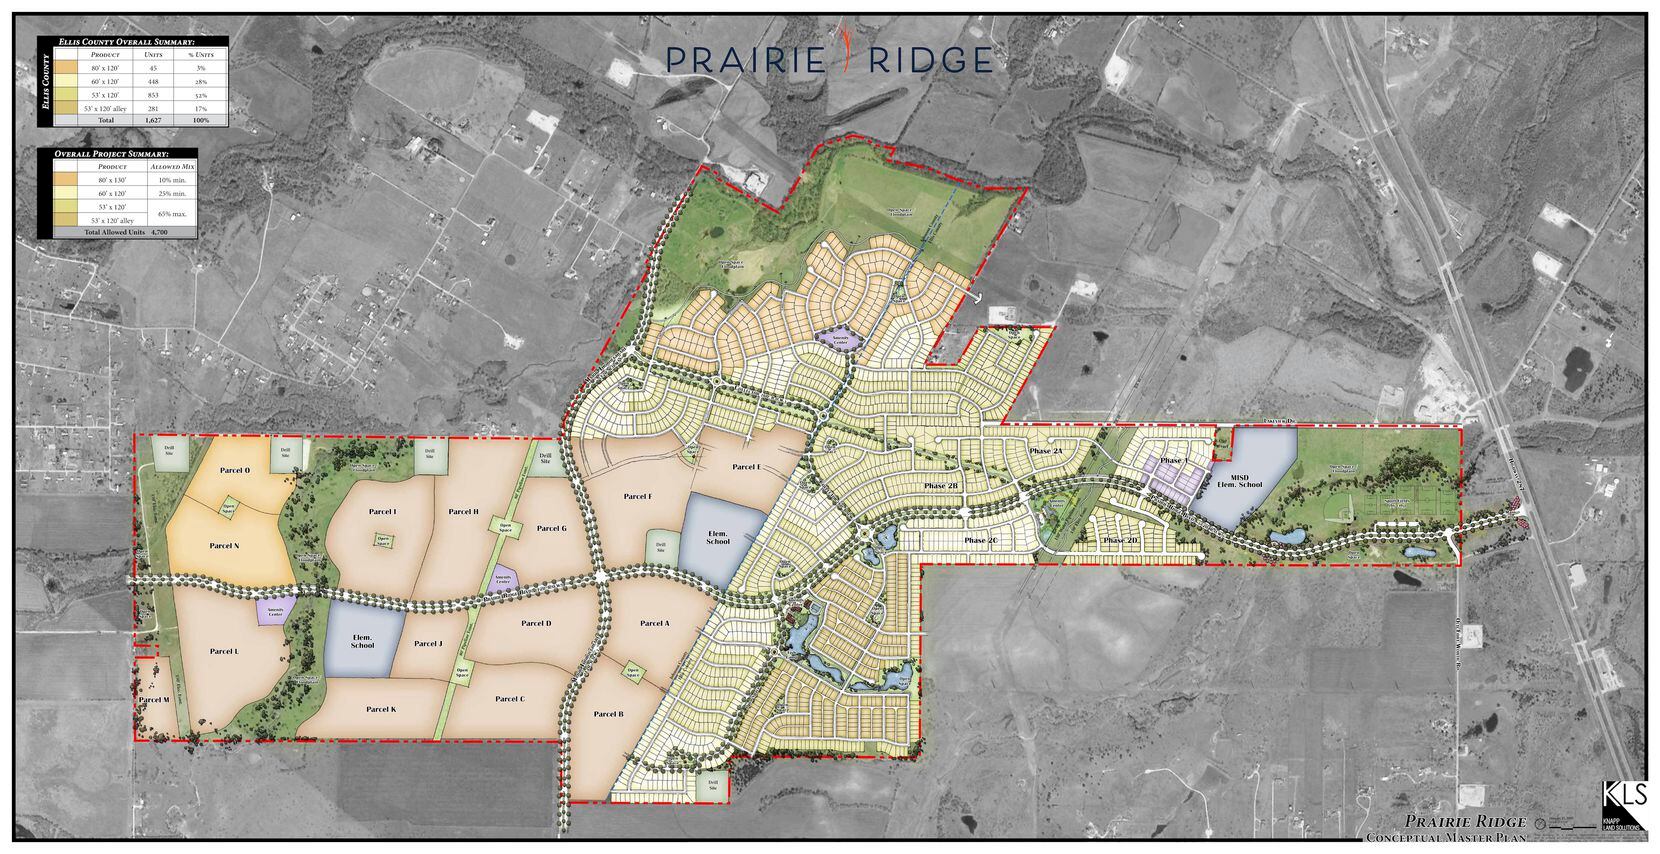 Prairie Ridge is 1,500 acres.